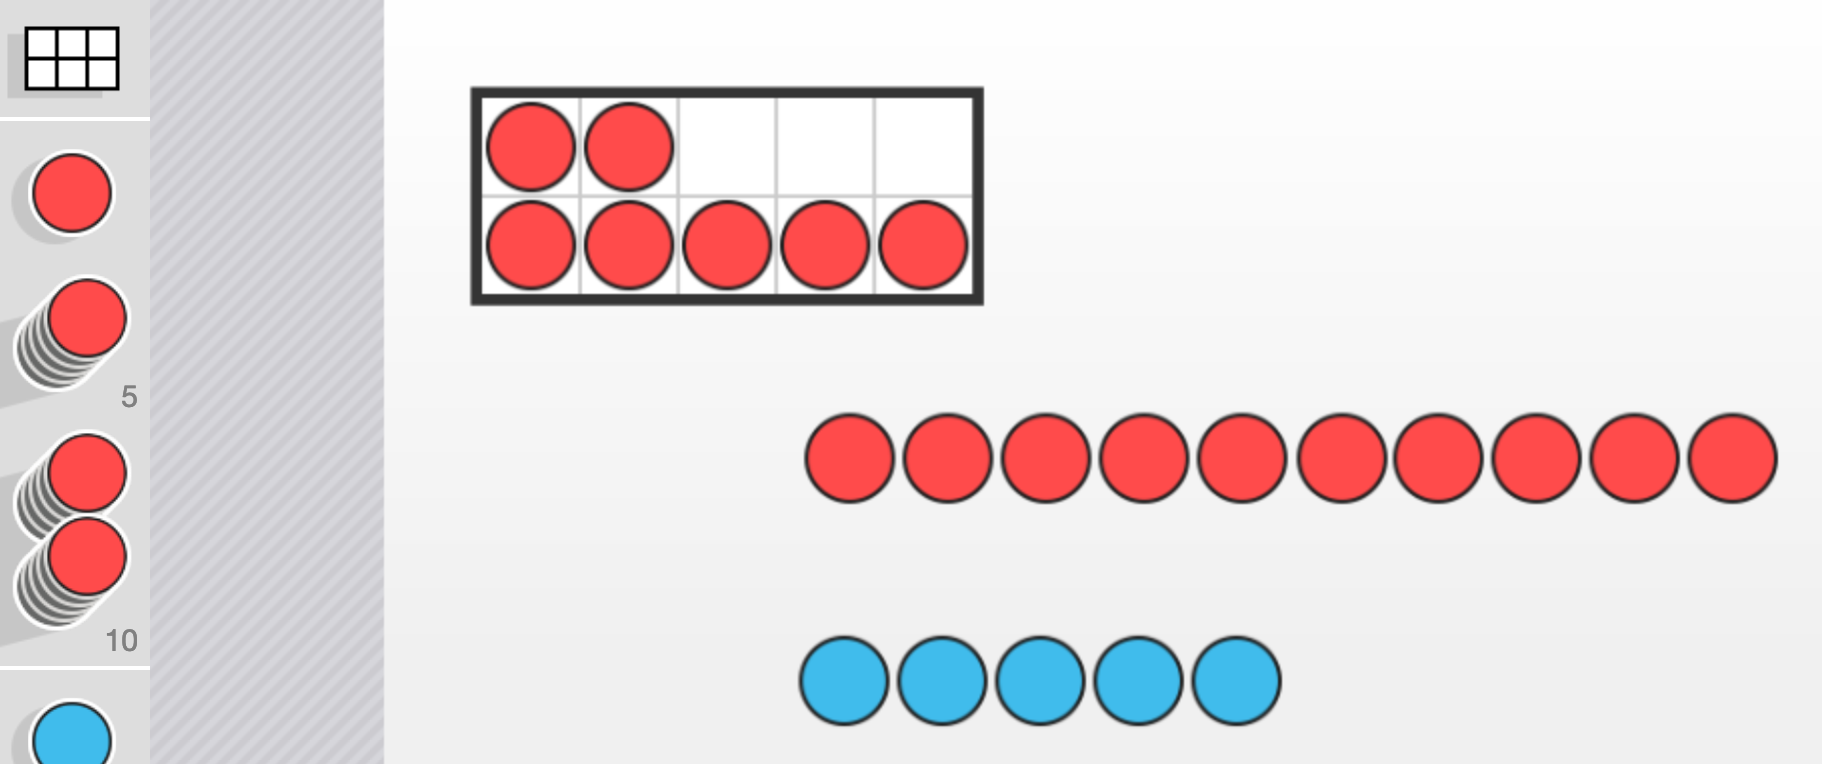 Math Manipulatives Teacher Resource Quiet Foam Two Color Integer Counters Algebr 